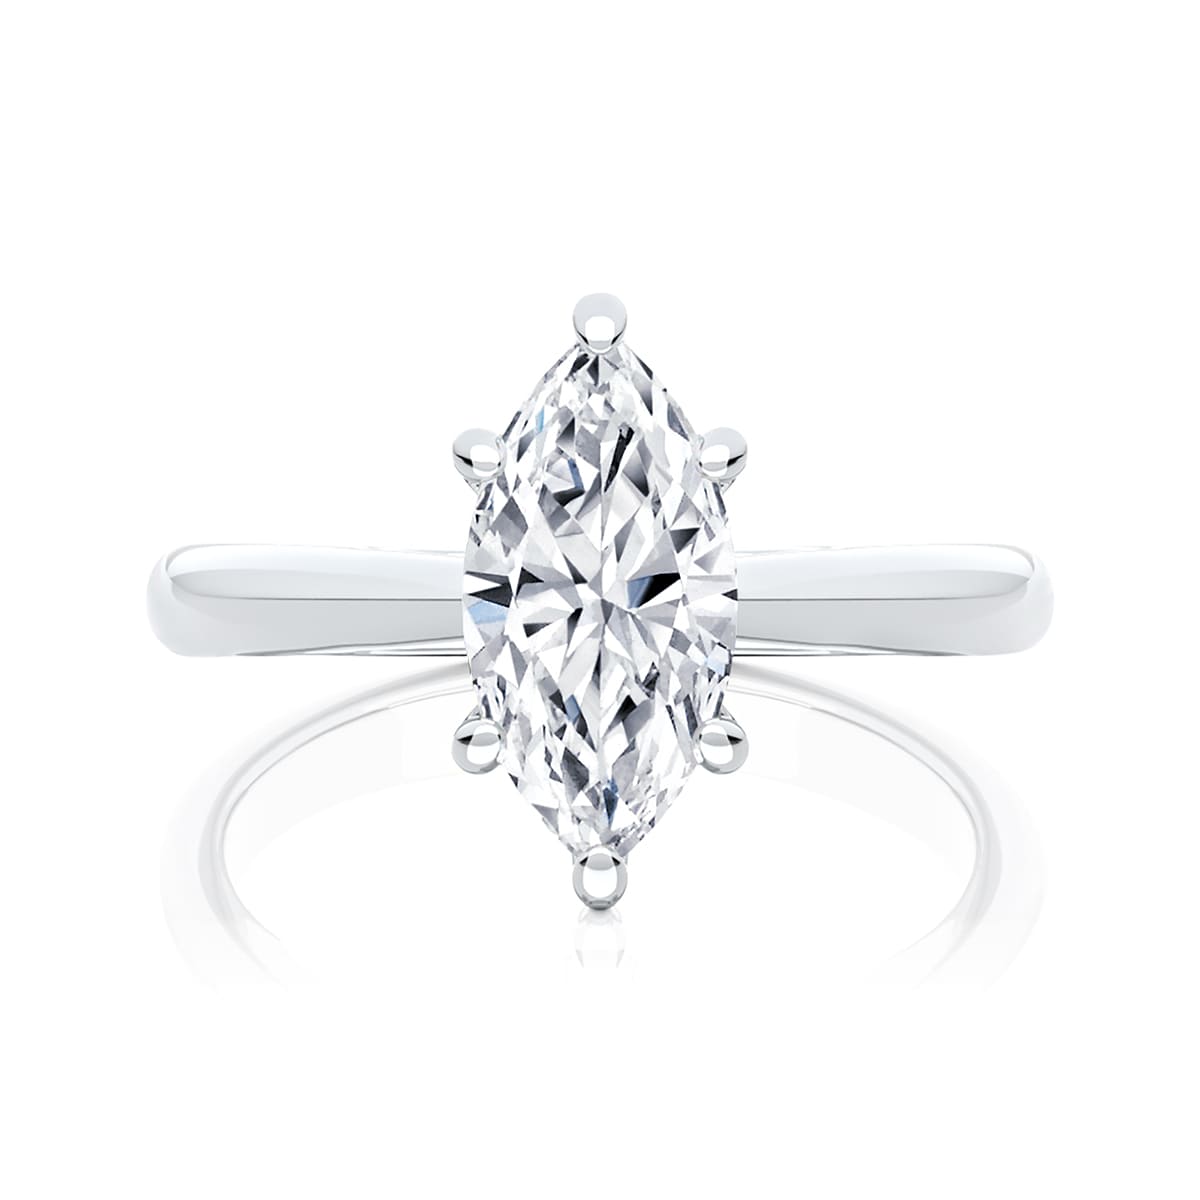 Marchesa Marquise Solitaire Diamond Engagement Ring in Platinum